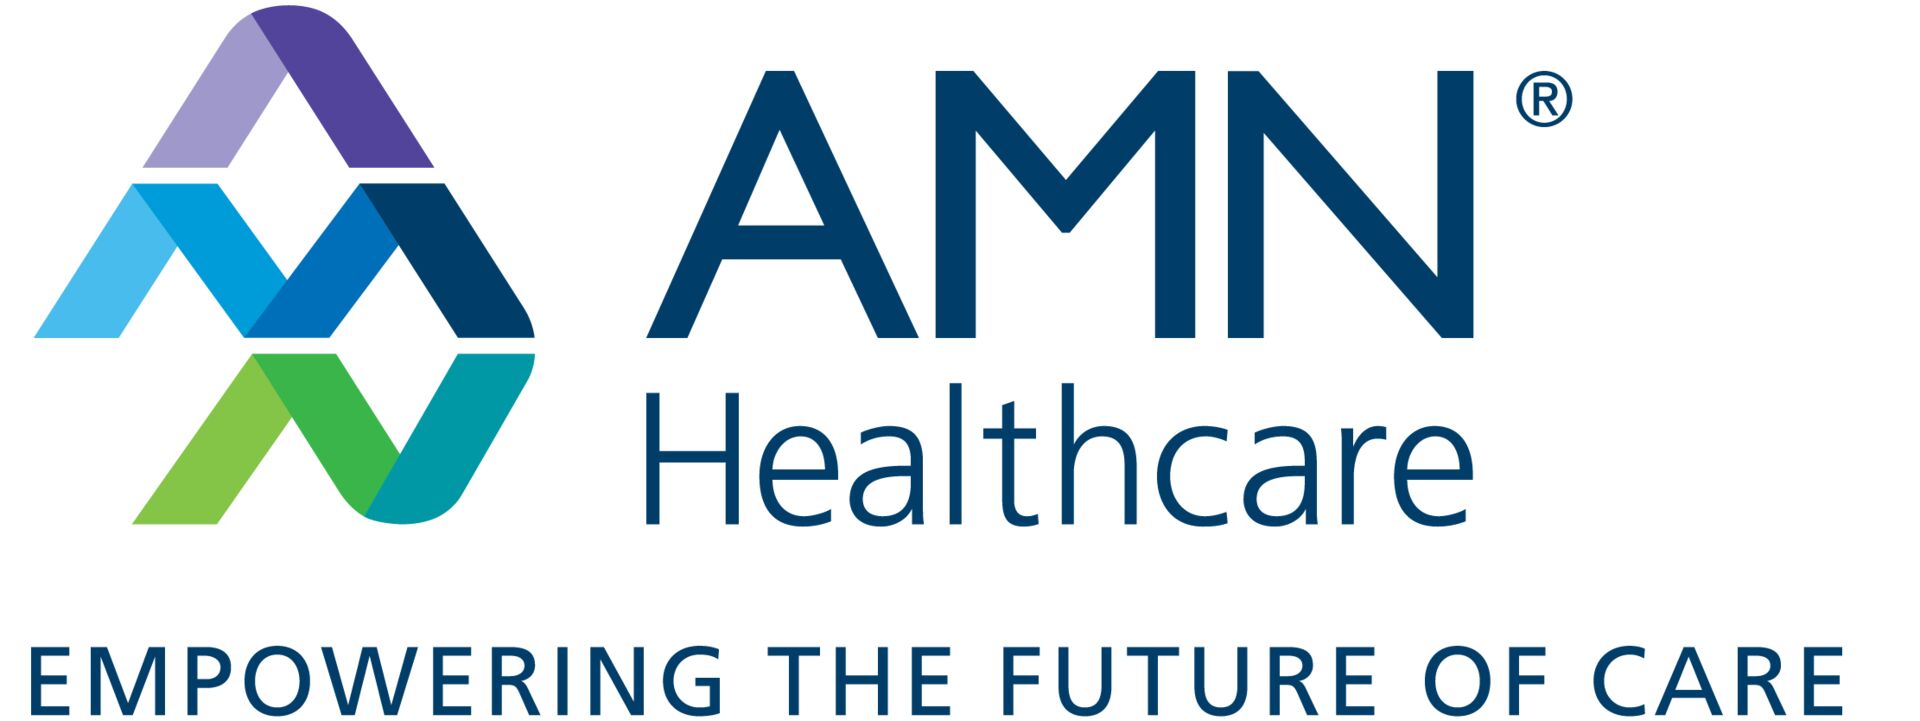 AMN Healthcare Appoints Jim Hinton to Board of Directors - GlobeNewswire